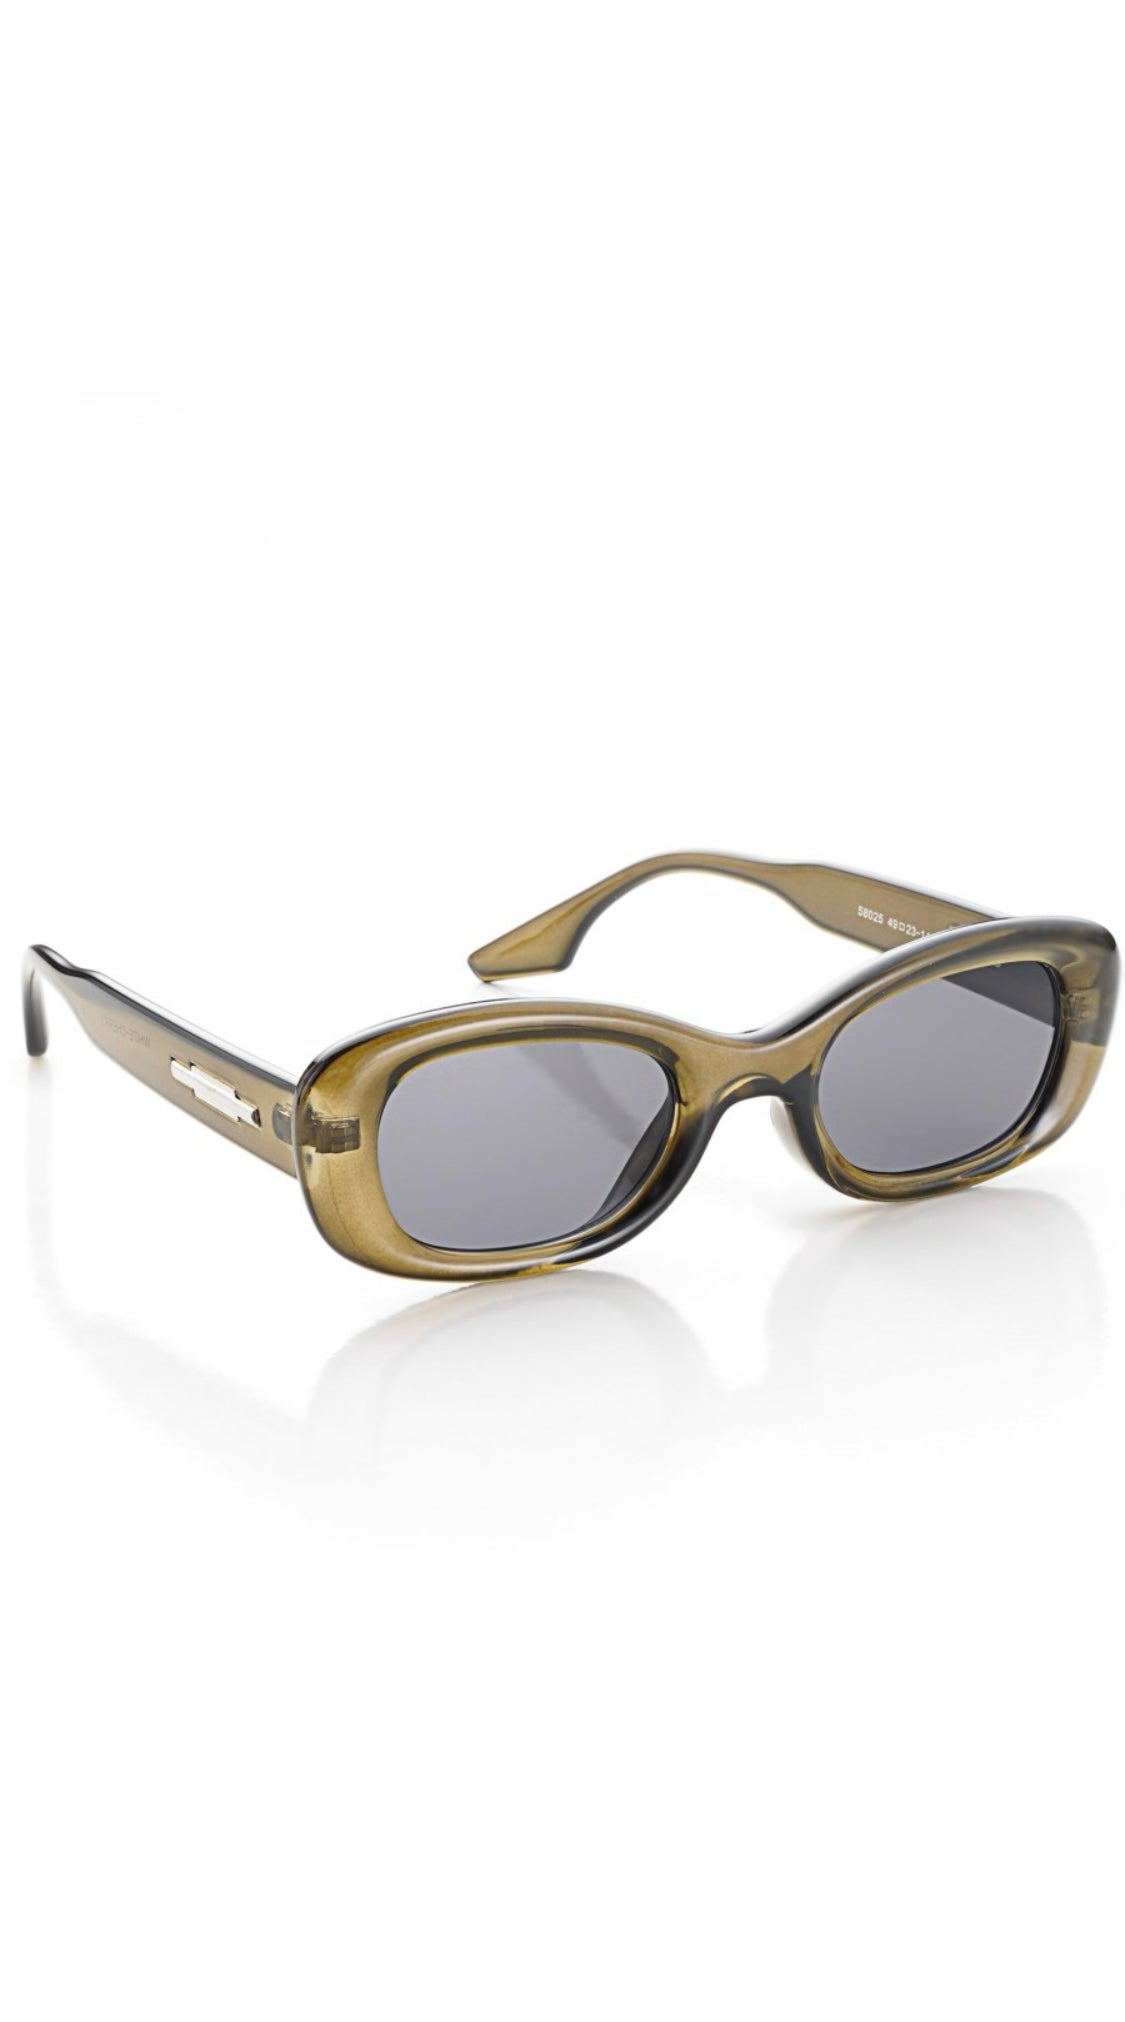 Jodykoes® Retro Style Vintage-Inspired Cat Eye Sunglasses Eyewear For Women (Olive)